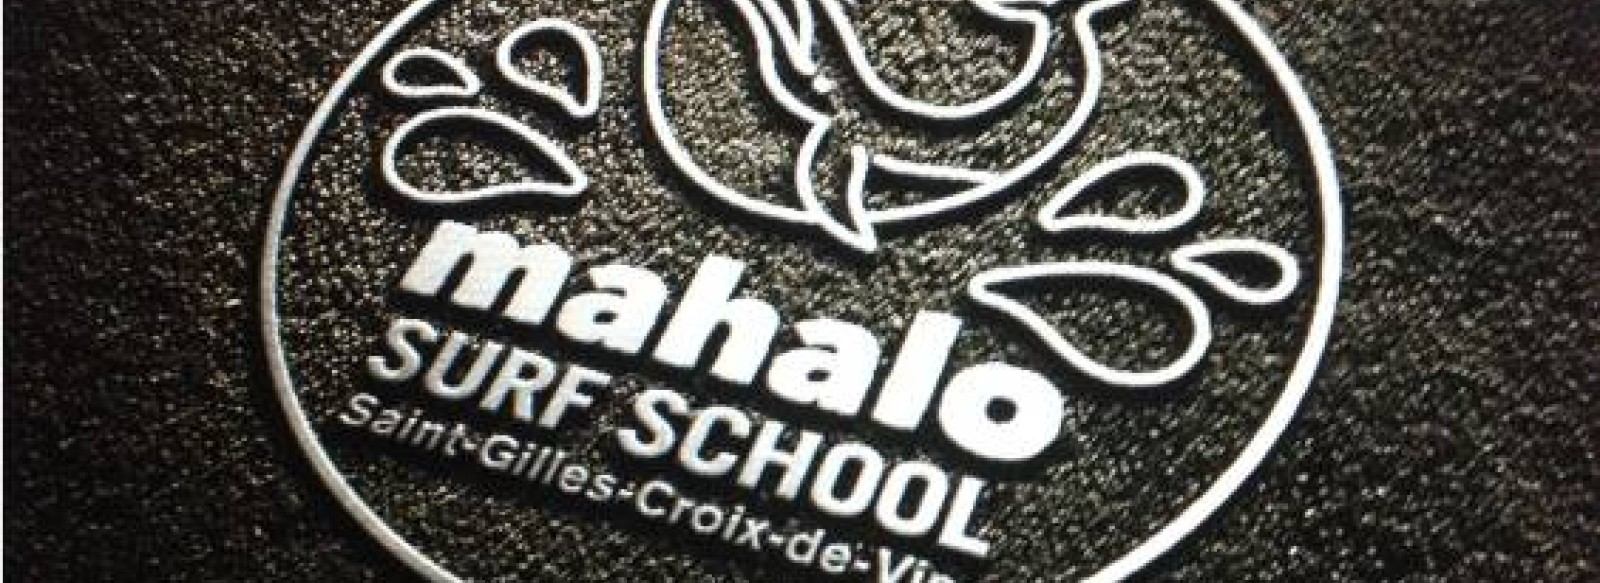 COURS DE BODYBOARD - MAHALO SURF SCHOOL